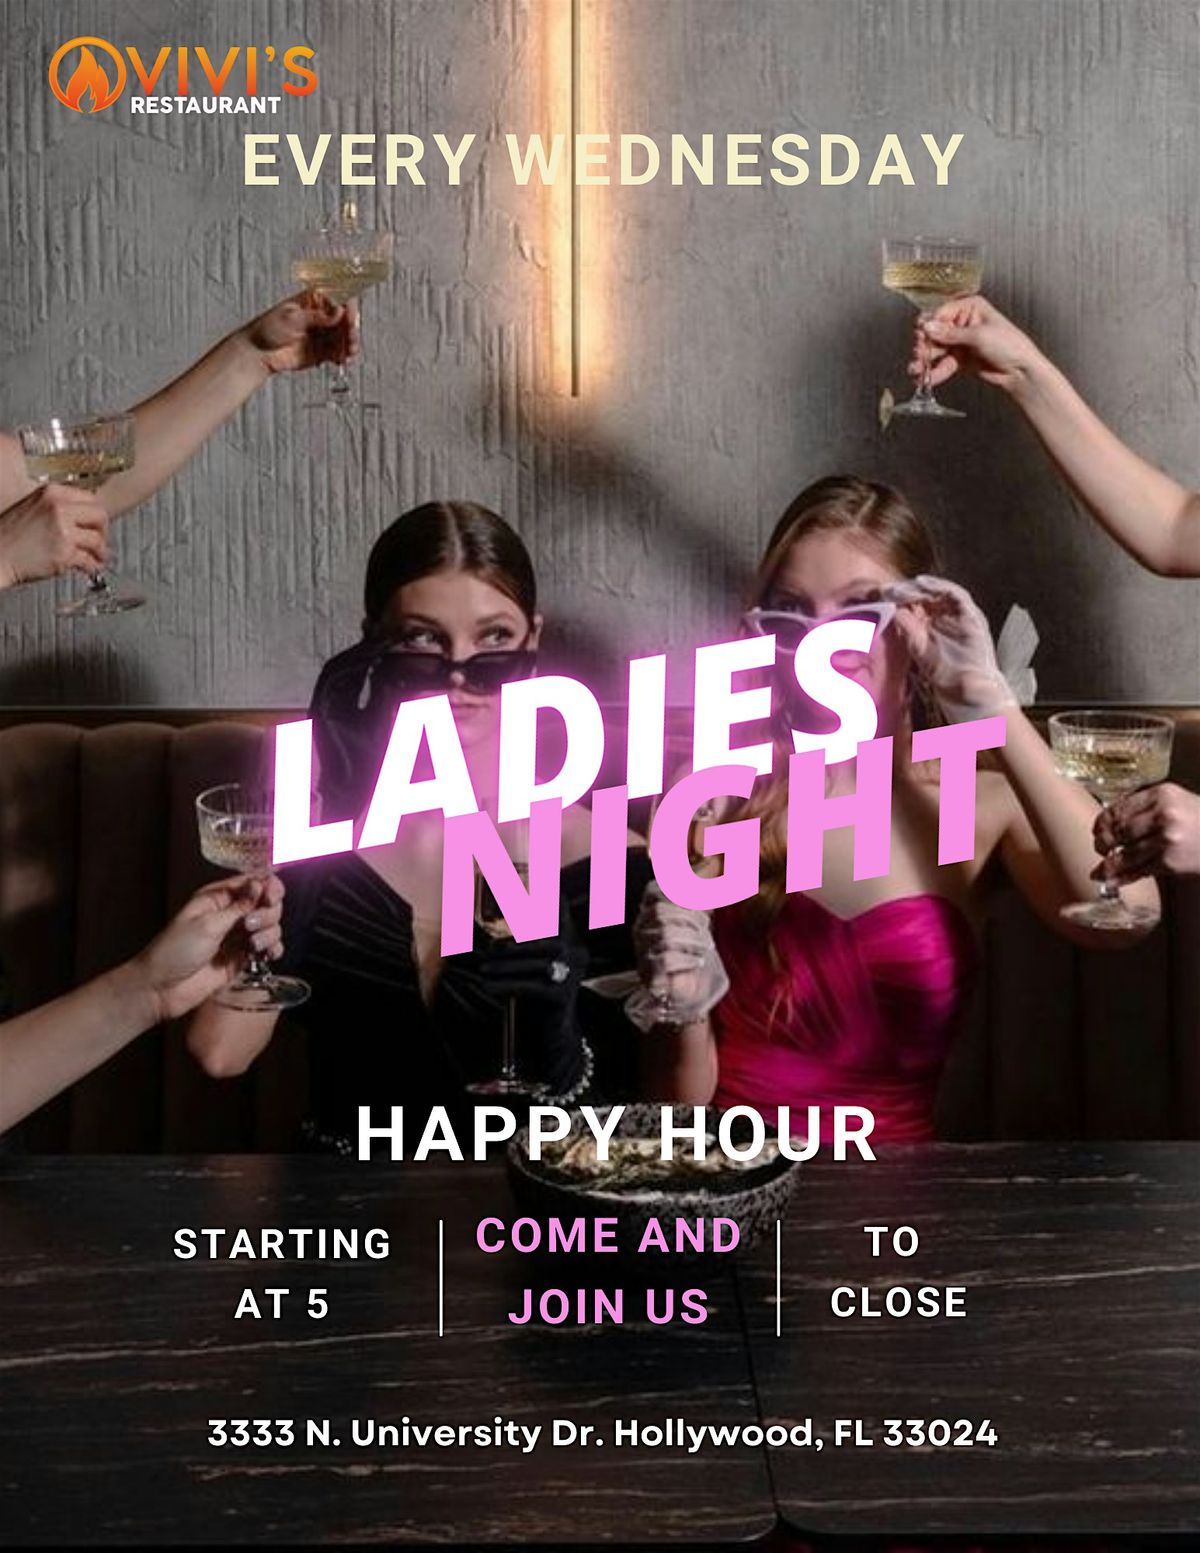 Let's go girls! Ladies Night at Ovivi's Restaurant